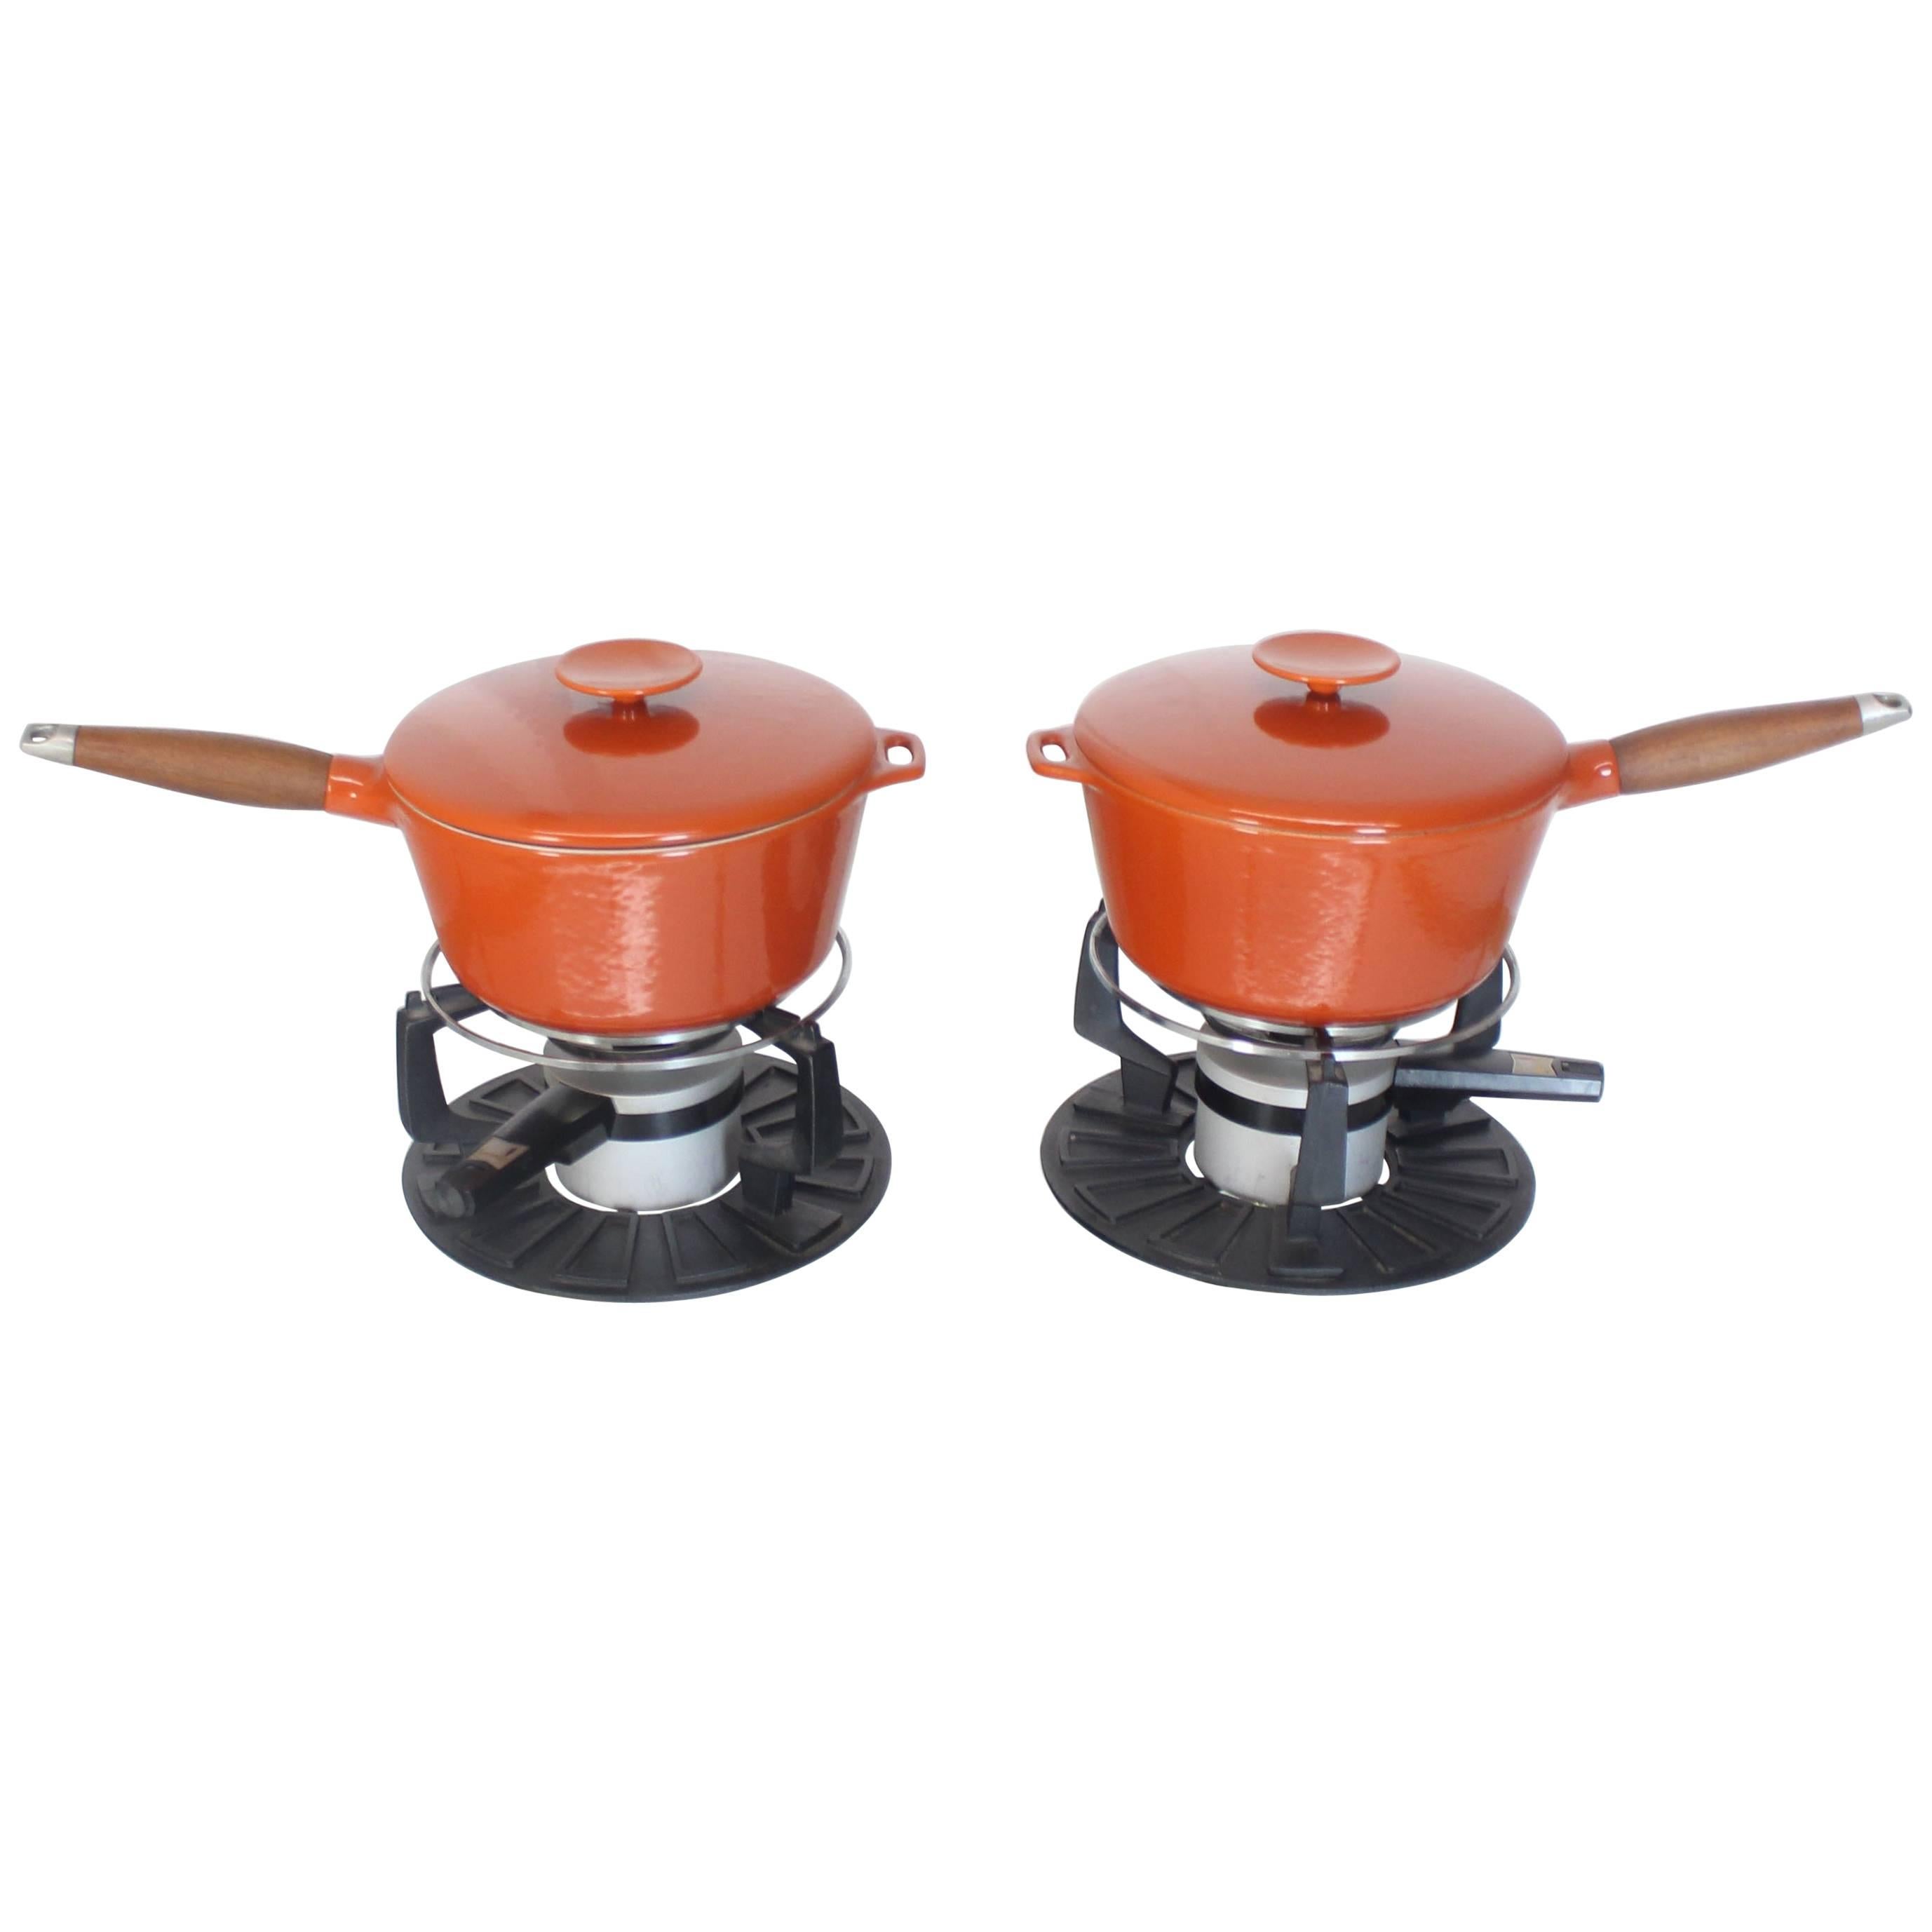 Pair of Danish Modern Orange Pots Sause Pans with Teak Handles and Food Warmers